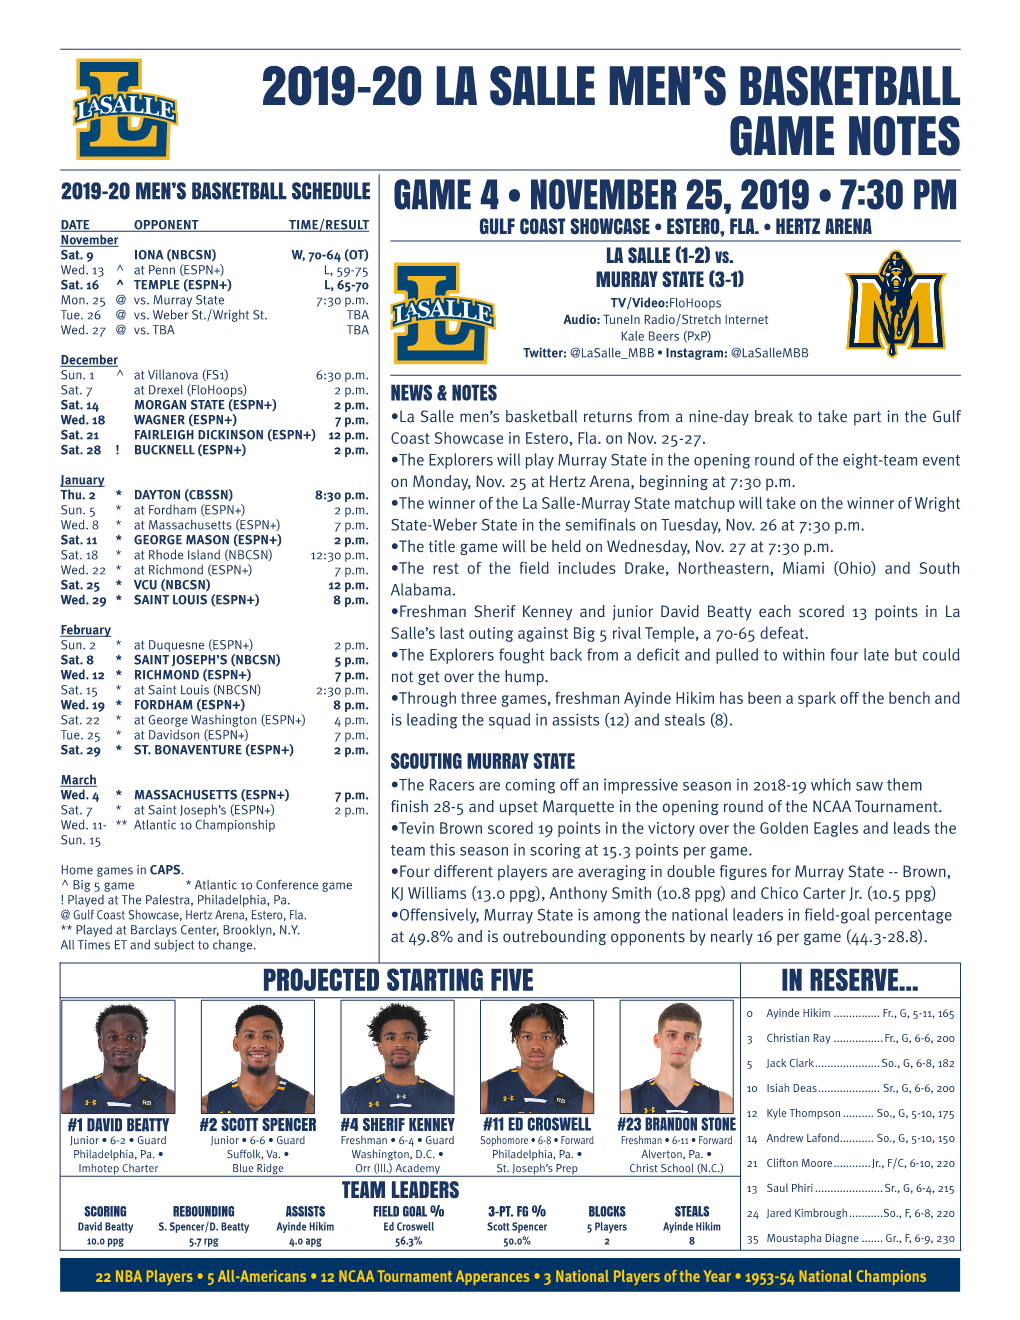 2019-20 La Salle Men's Basketball Game Notes